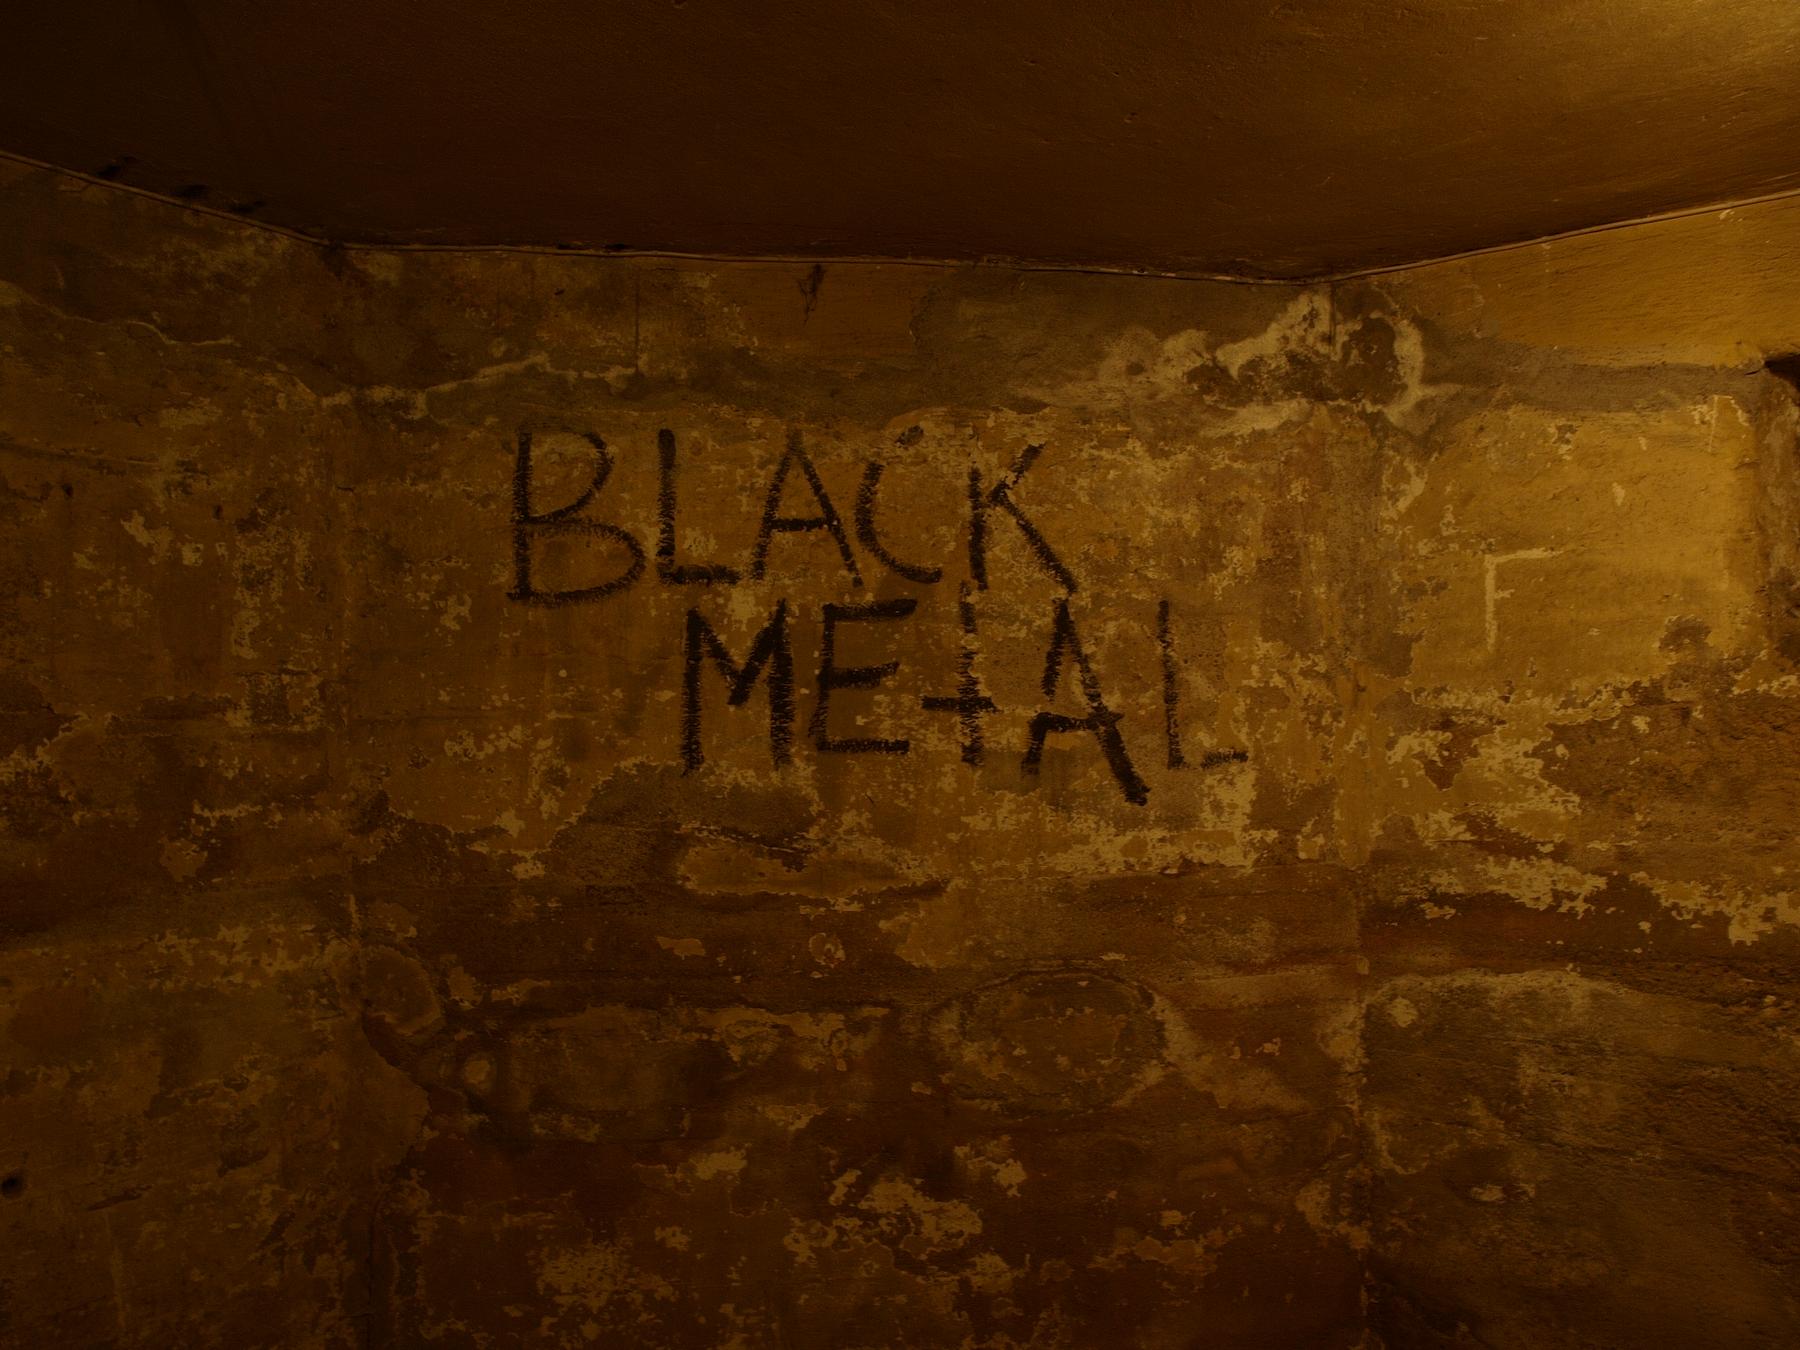 a man in a room with graffiti on the wall - File:Helvete Oslo - black metal graffiti.jpg